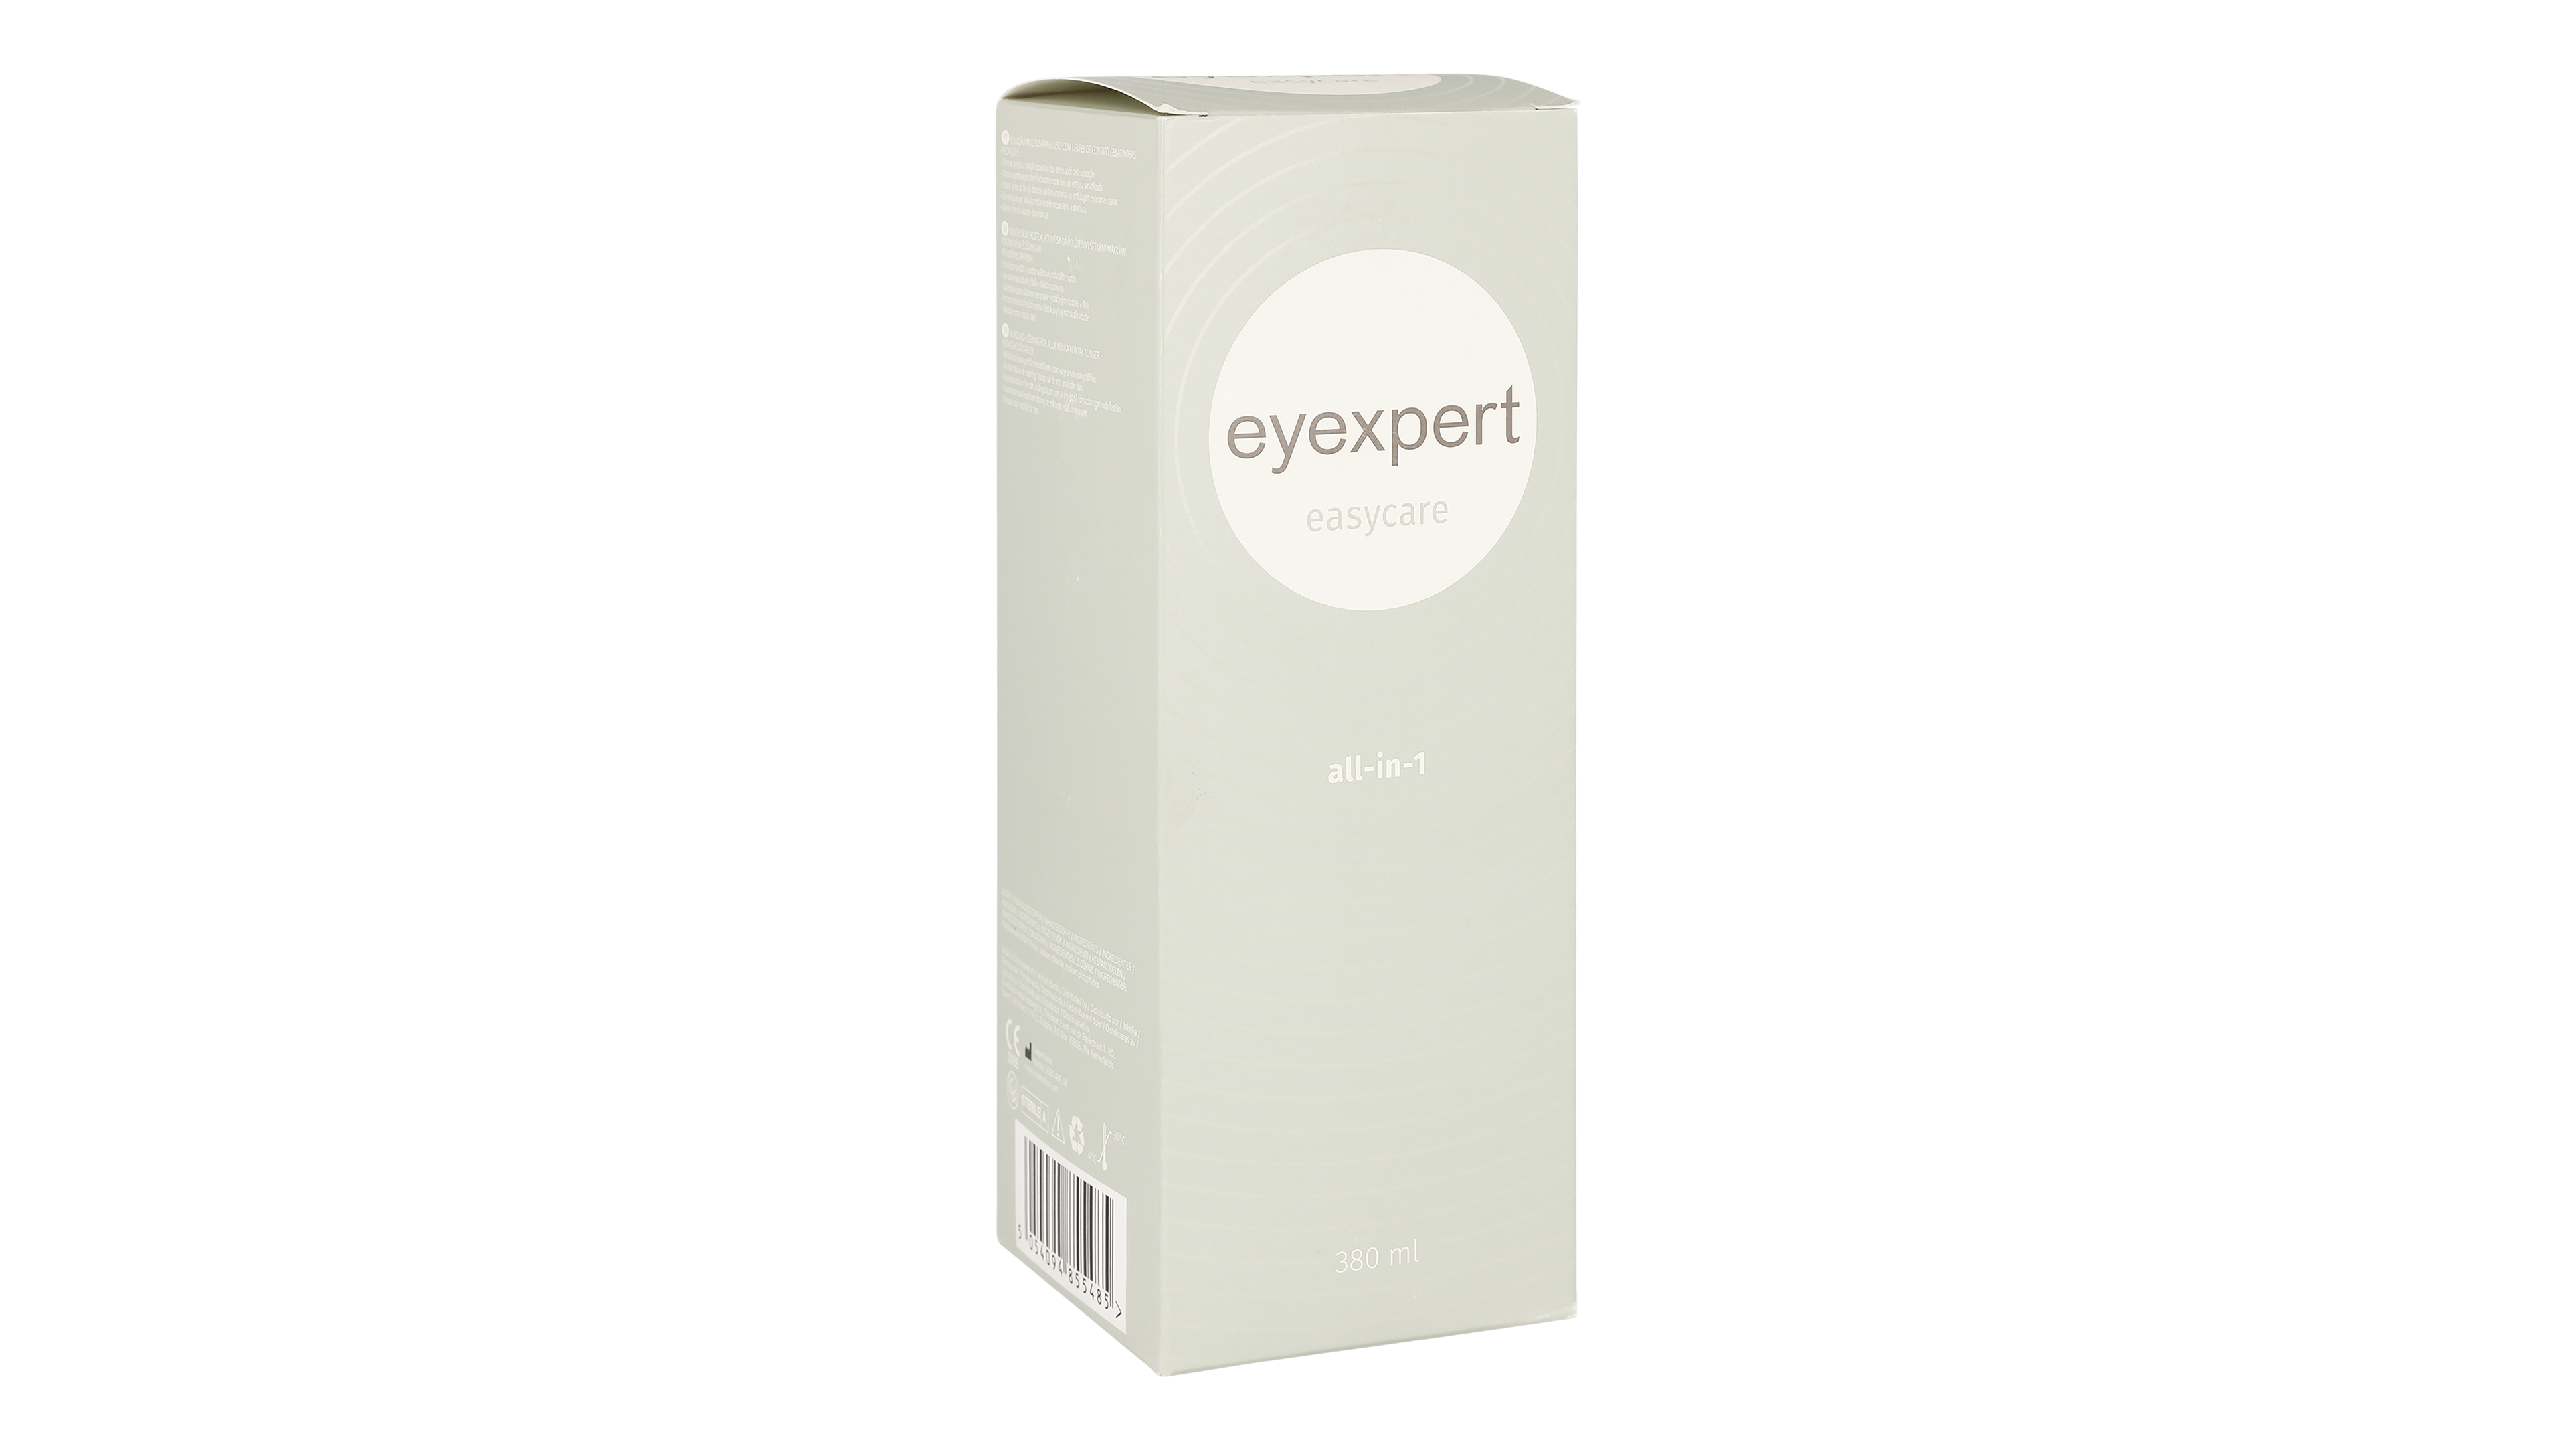 Angle_Right01 Eyexpert Eyexpert Easycare 380ml